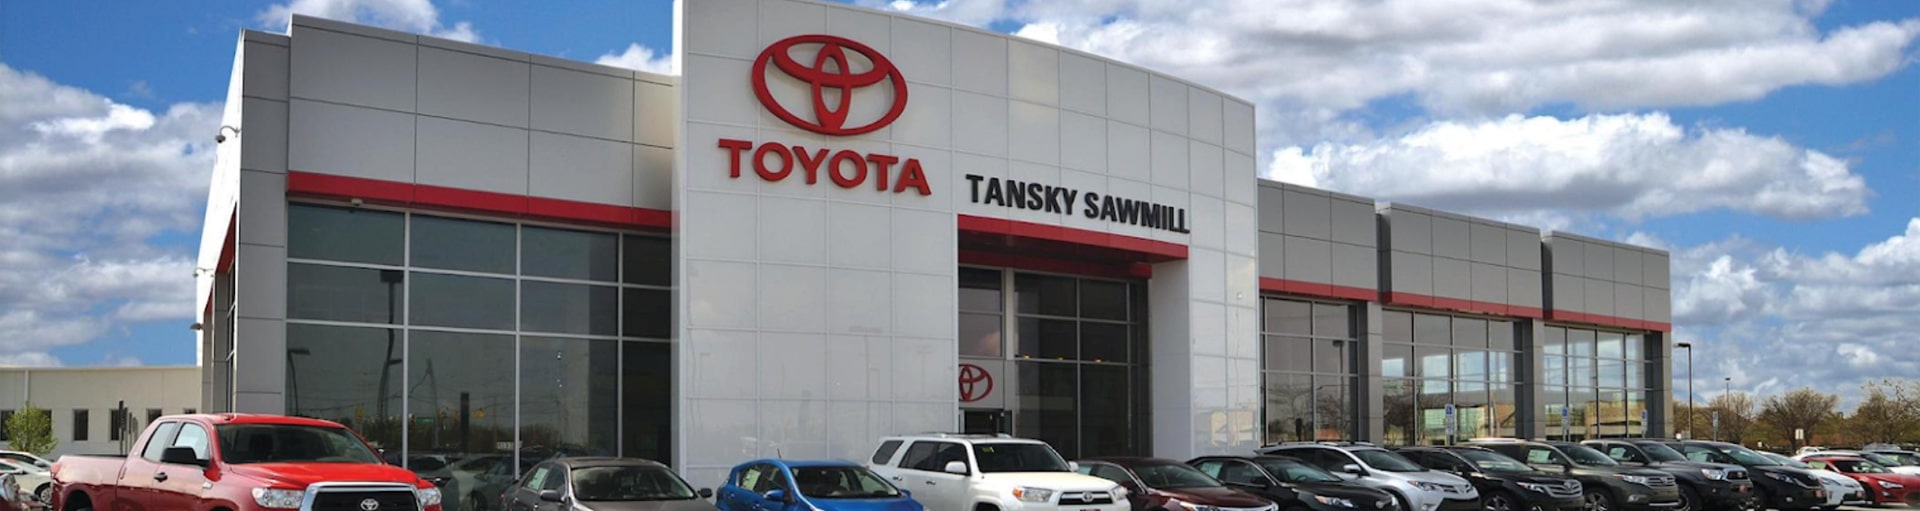 Tansky Sawmill Toyota Windshield Wiper Replacement Service